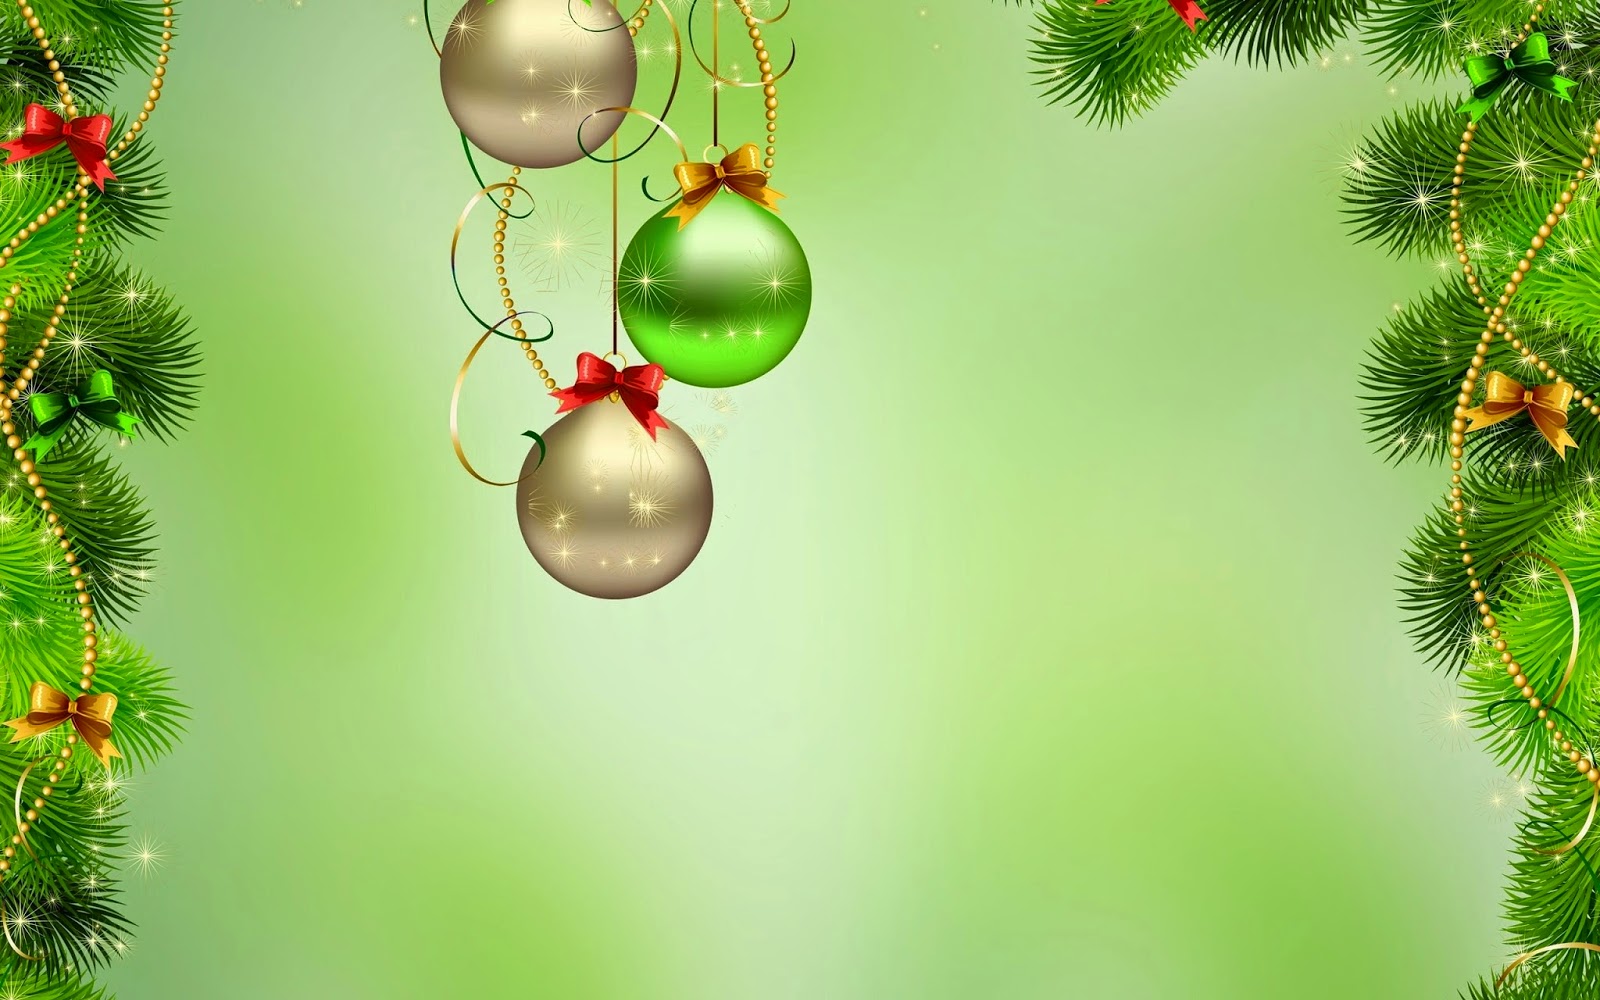 tarjeta de navidad fondo de pantalla,decoración navideña,verde,decoración navideña,árbol,árbol de navidad